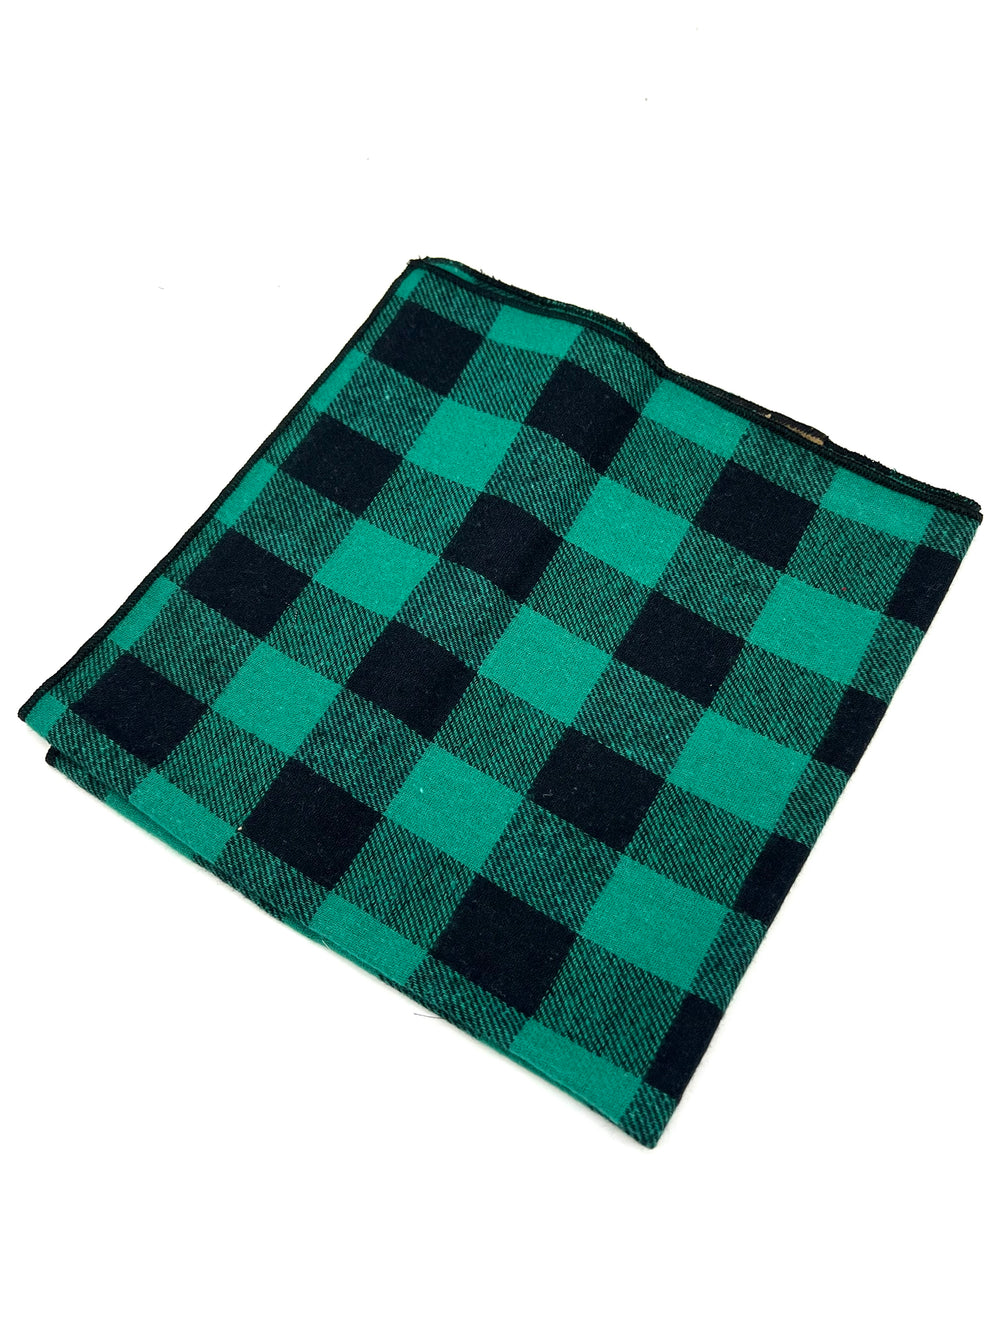 The Green & Black Plaid Handkerchief